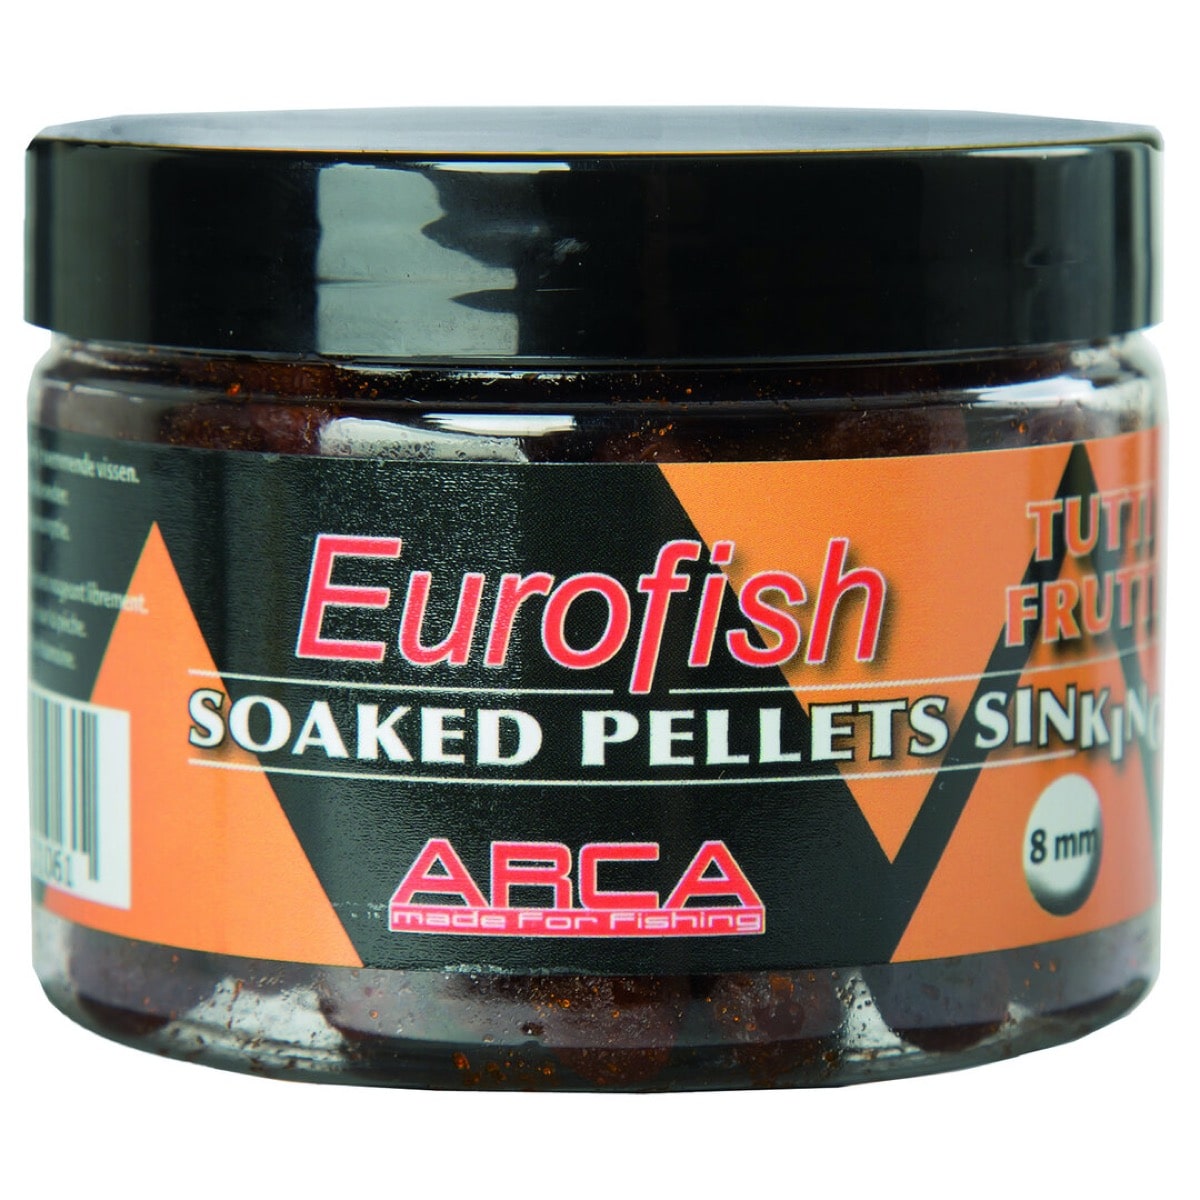 Eurofish soaked pellets sinking 8mm tutti frutti